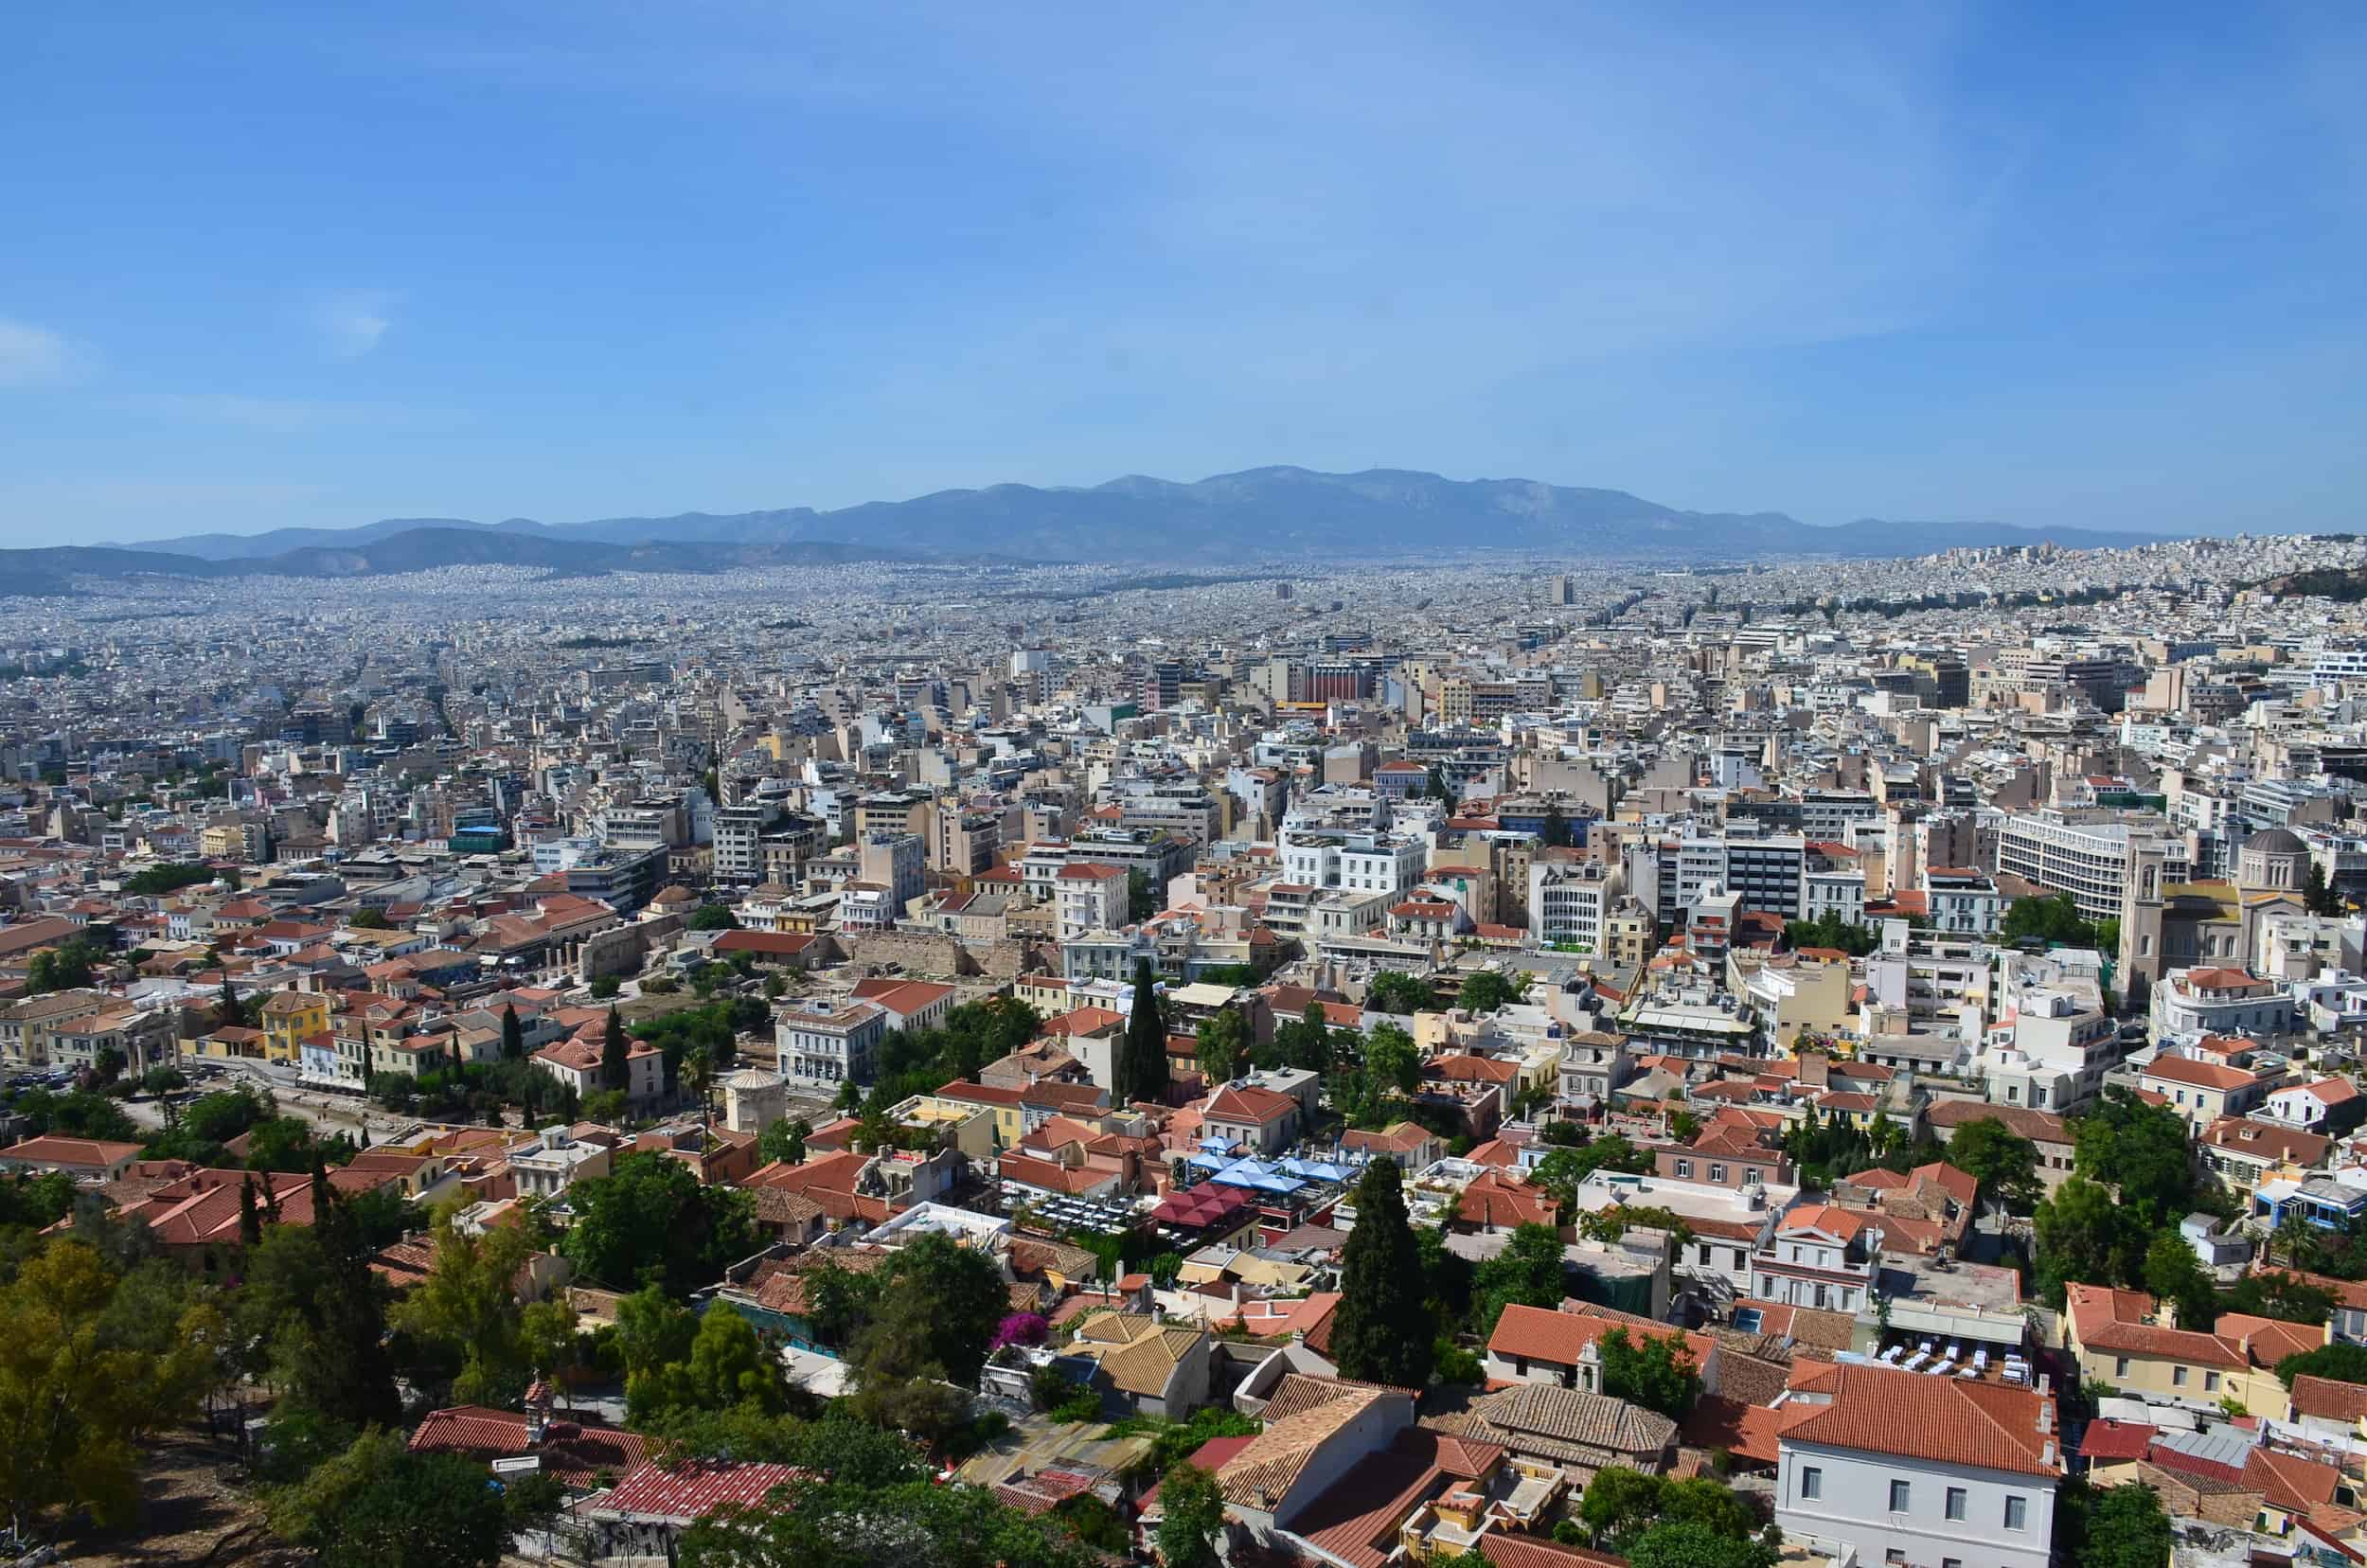 Plaka, Monastiraki, and the Historic Center of Athens from the Acropolis